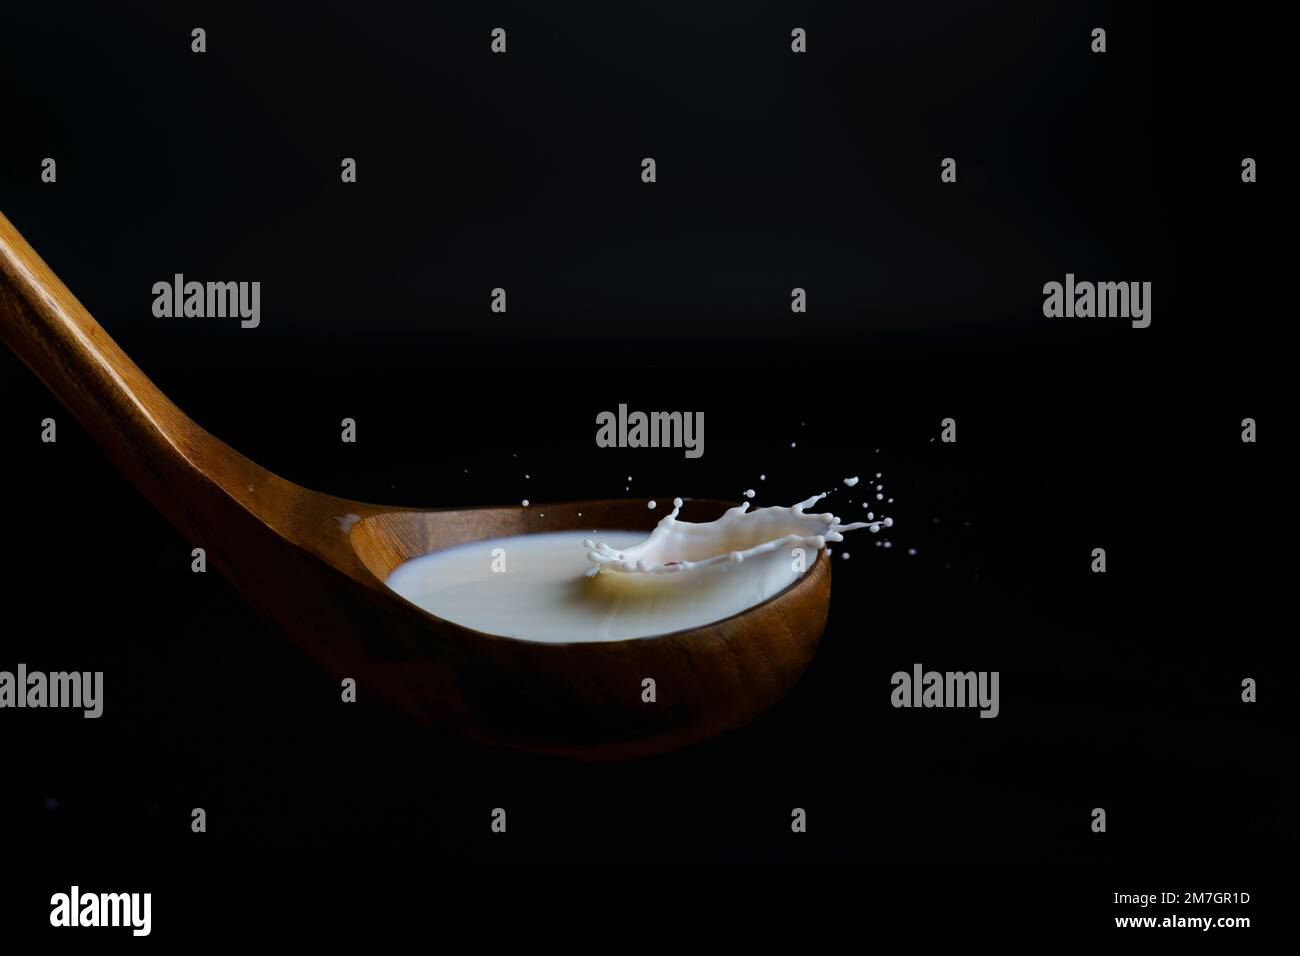 Milk splashing on a wooden ladle, with splash effect and black background Stock Photo